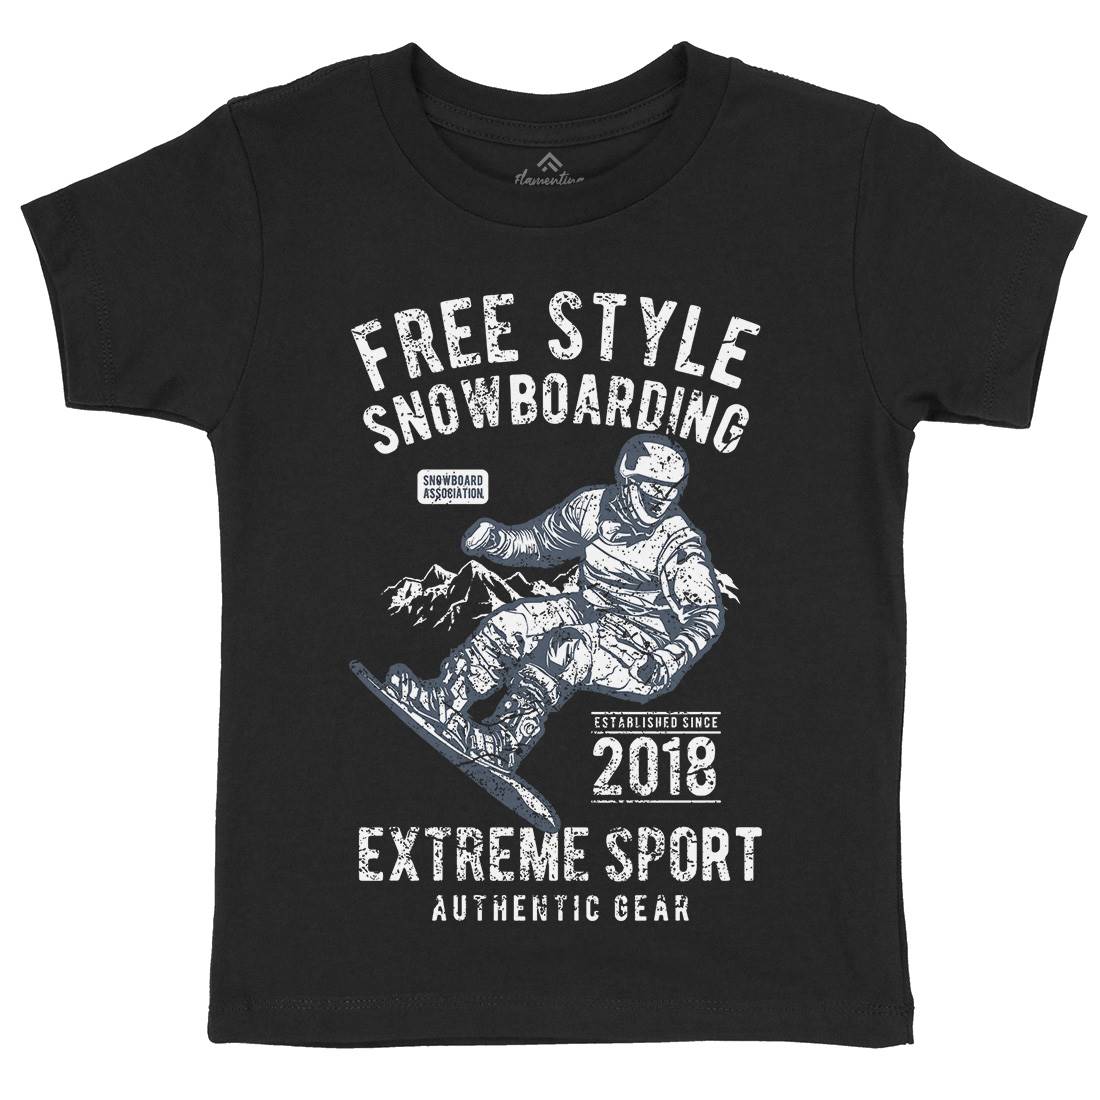 Free Style Snowboarding Kids Crew Neck T-Shirt Sport A666